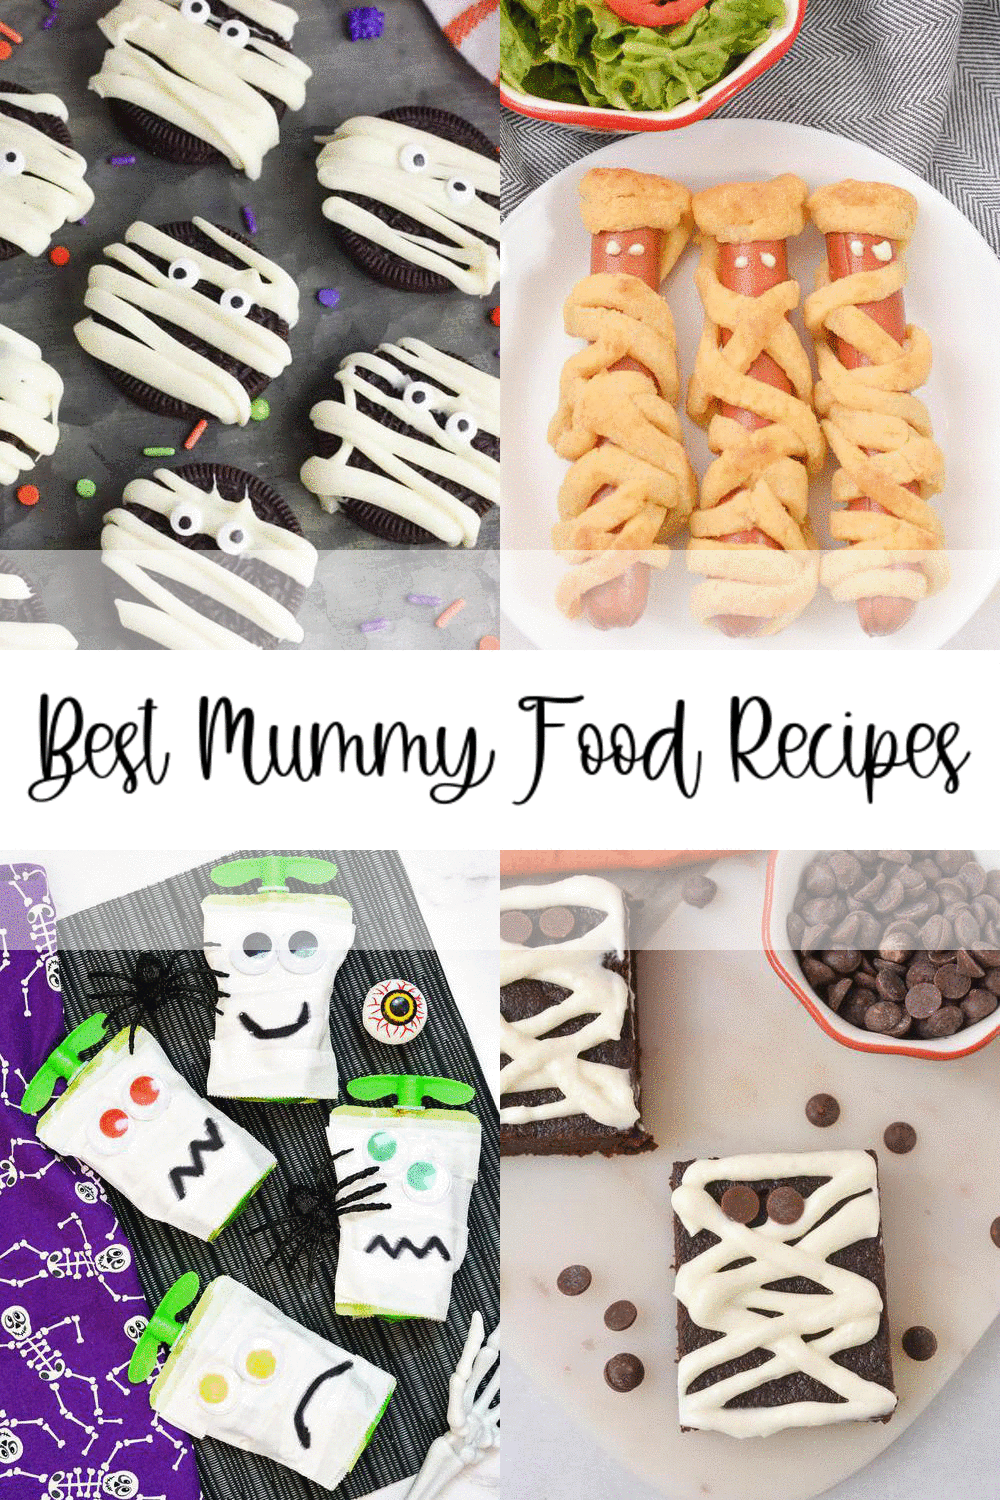 8 Mummy Food Recipes - Best Mummy Food Ideas - Halloween Food